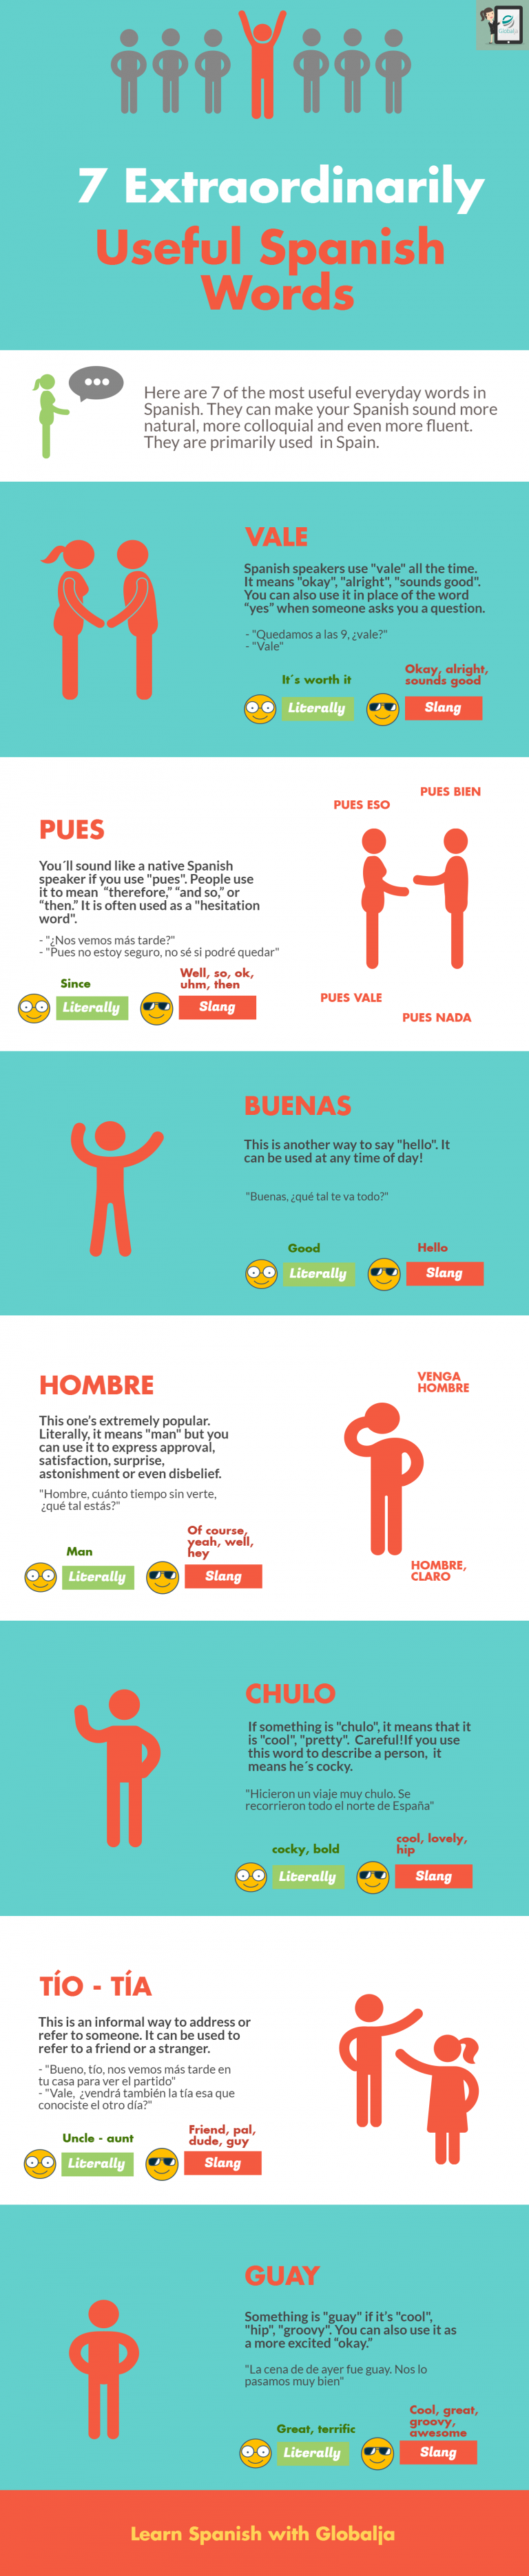 7-extraordinarily-useful-spanish-words-in-globalja